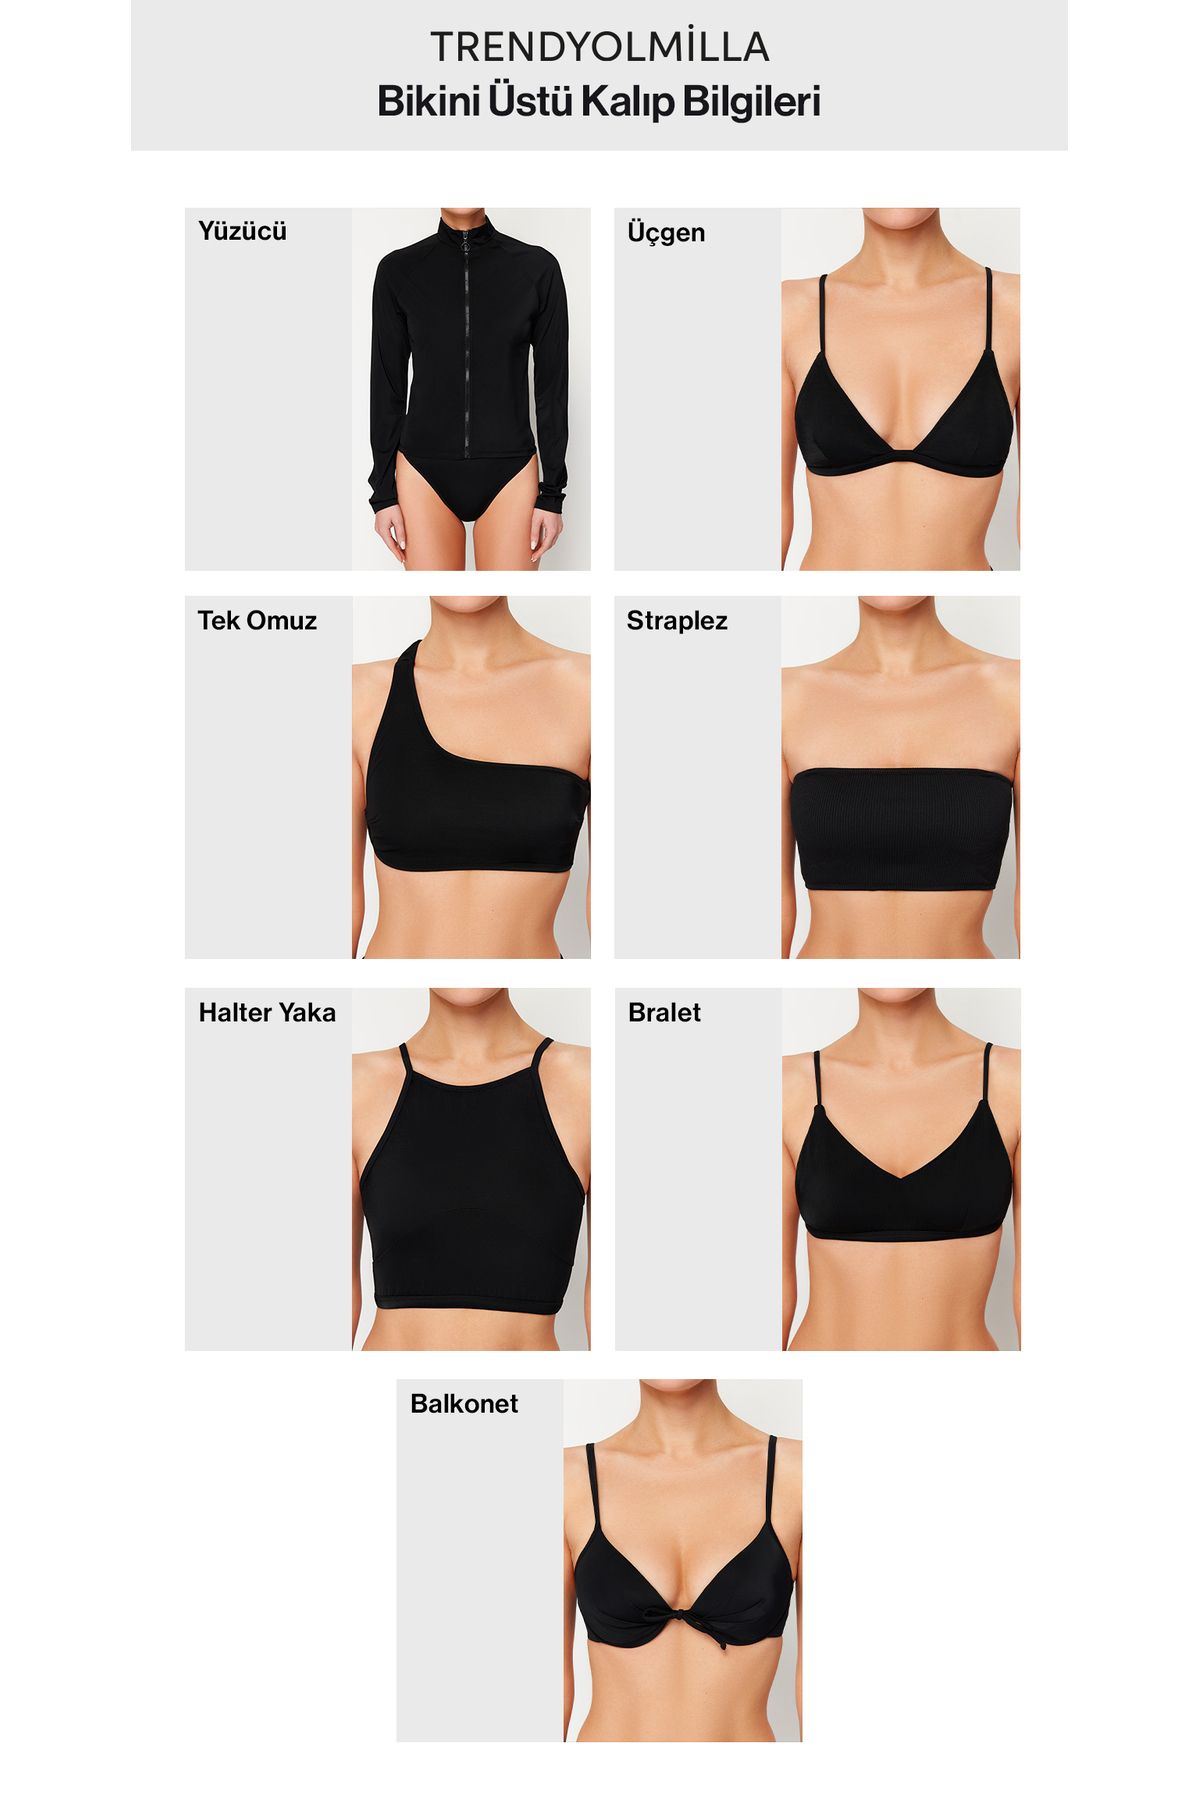 BİKİNİNCİ Women's Tightening İnci Bikini Set - Trendyol